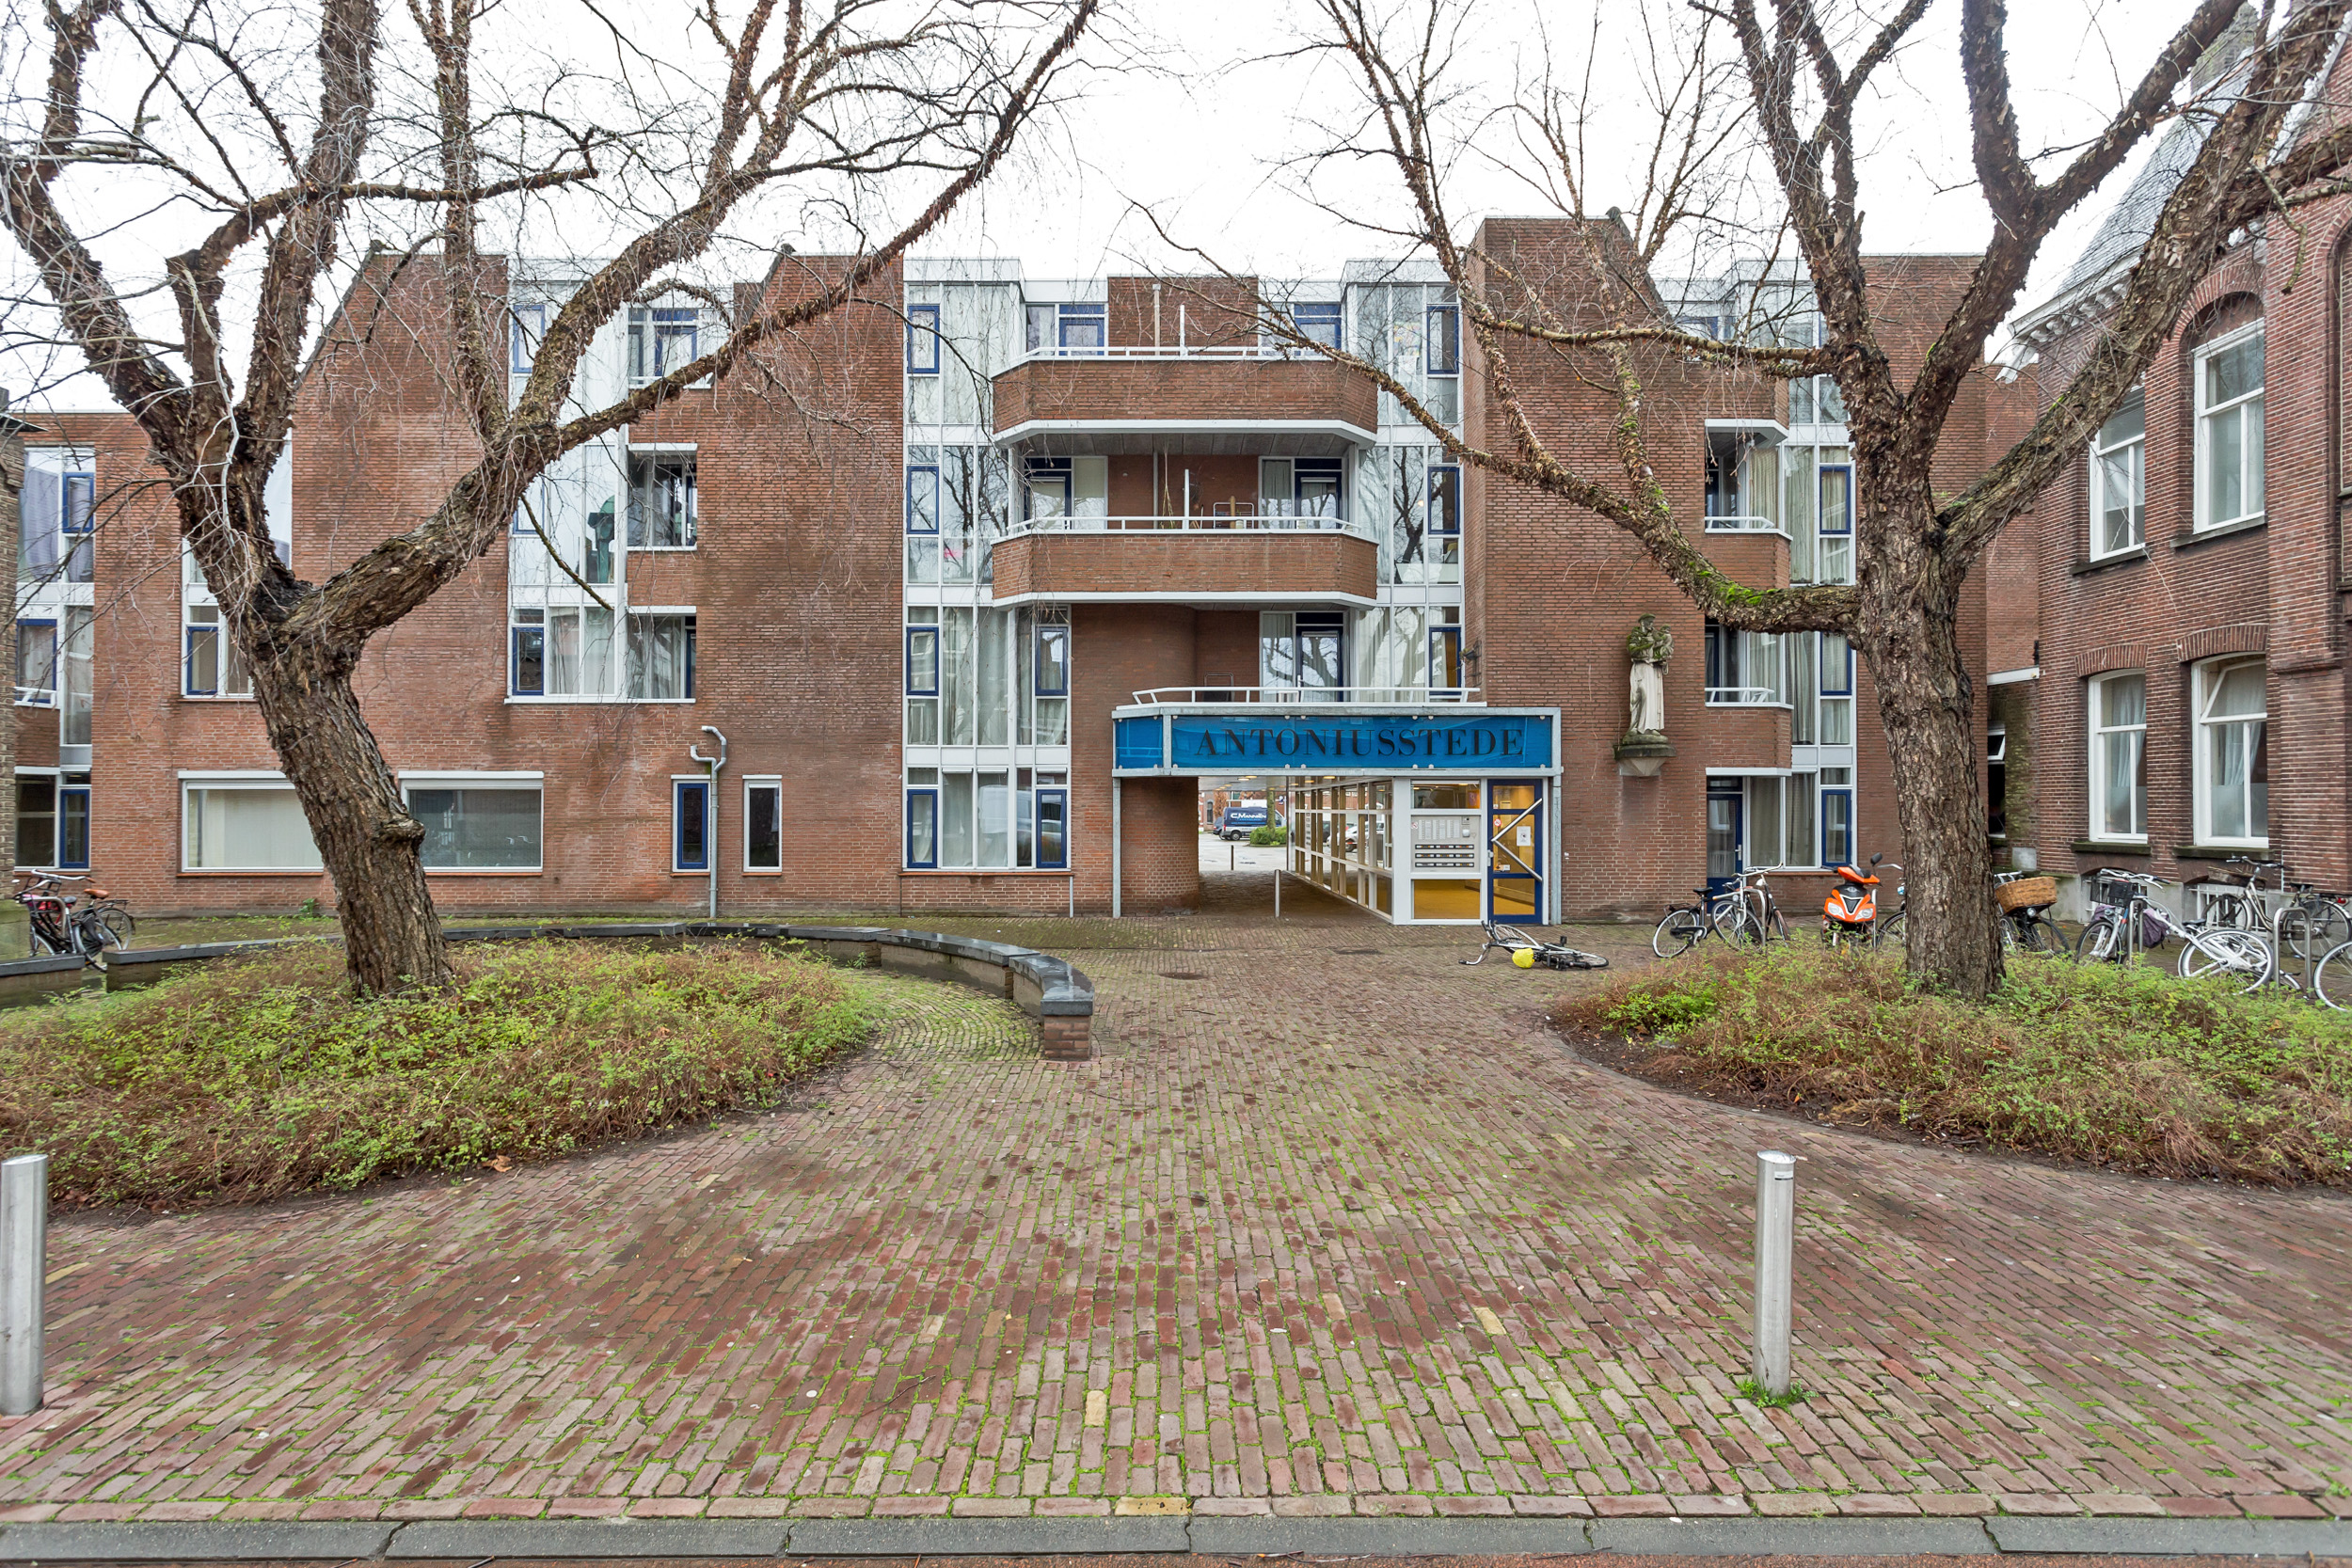 Antoniusstede 43, 4702 XT Roosendaal, Nederland